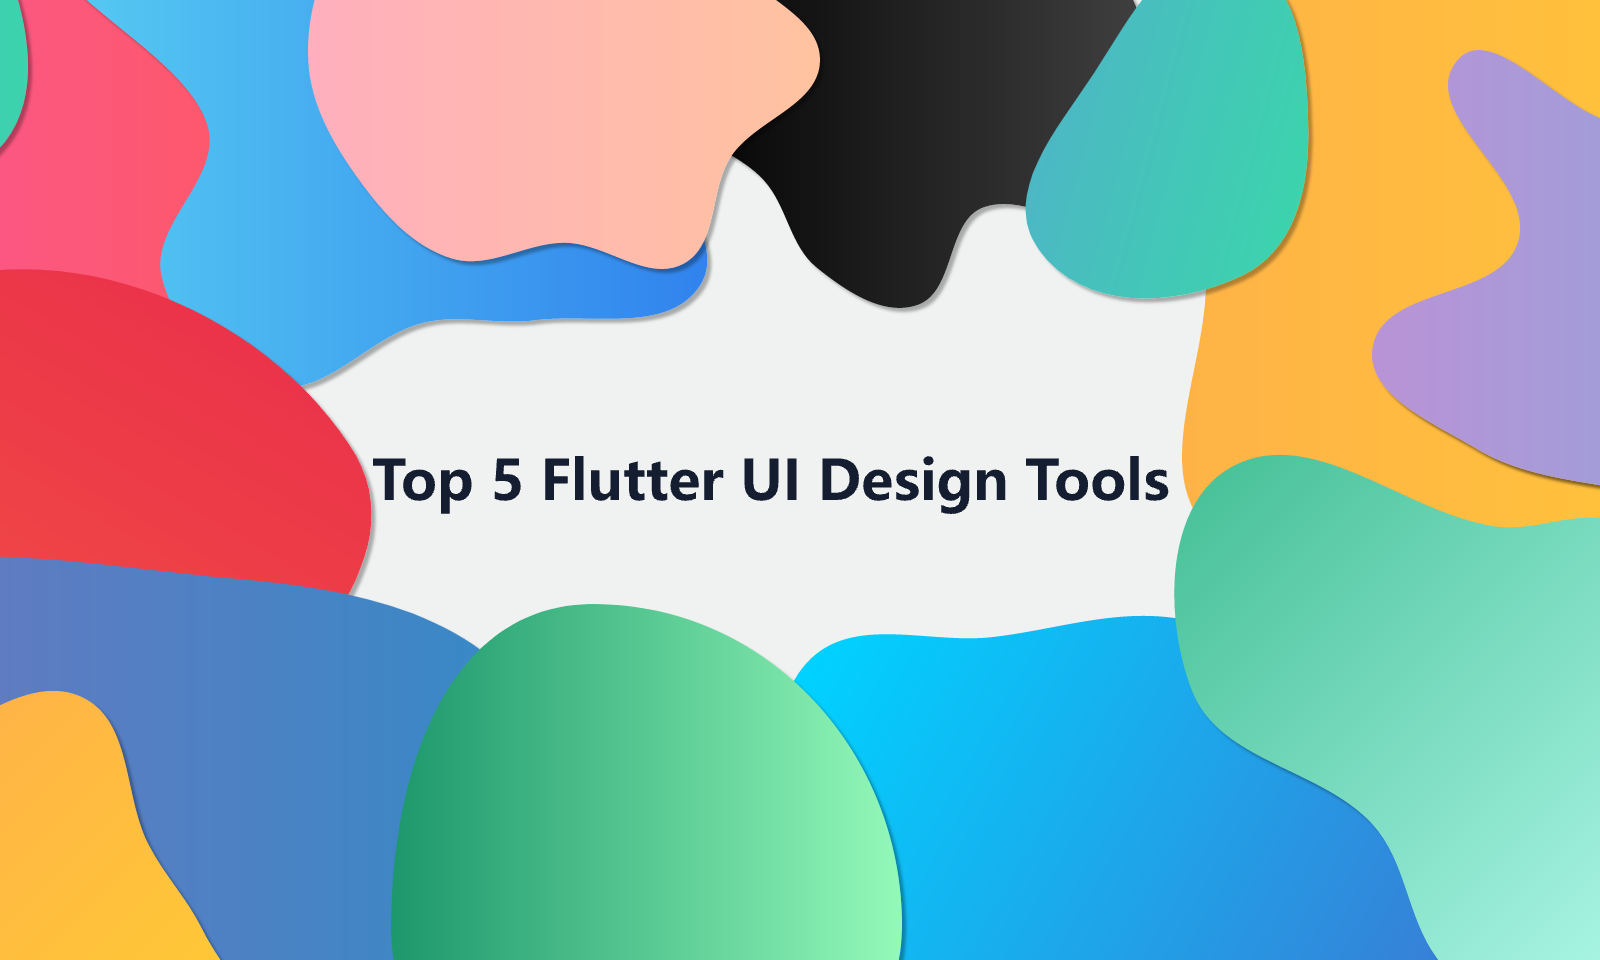  Top 5 Flutter UI Design Tools